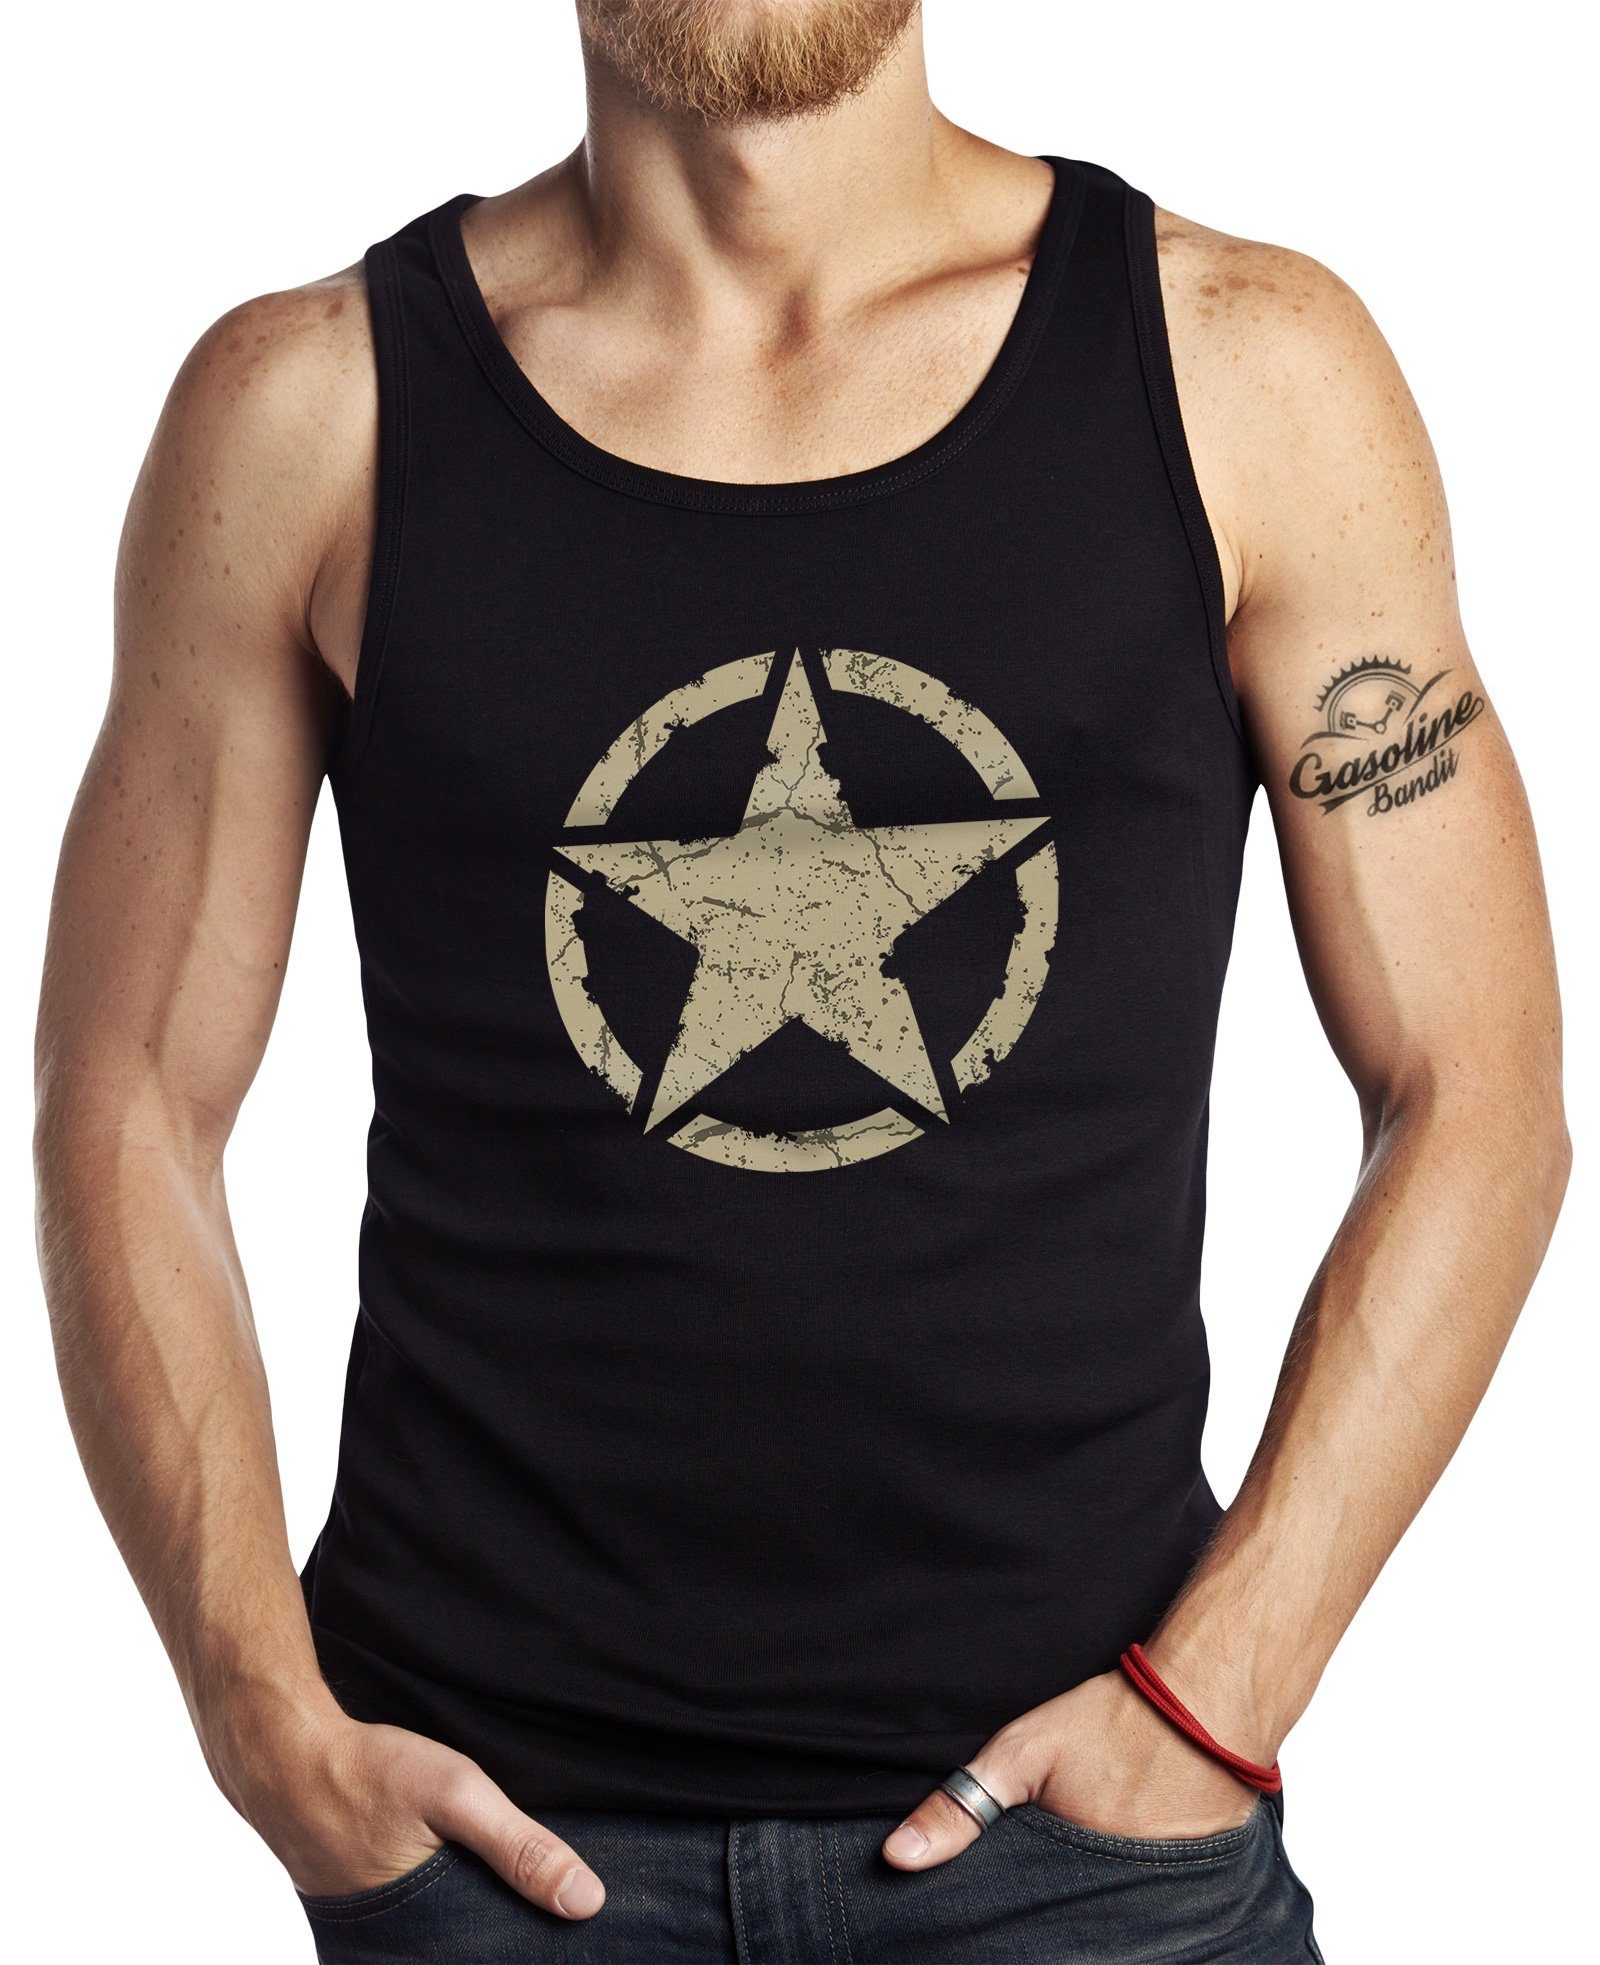 GASOLINE BANDIT® Tanktop Star Muskel-Shirt: US-Army